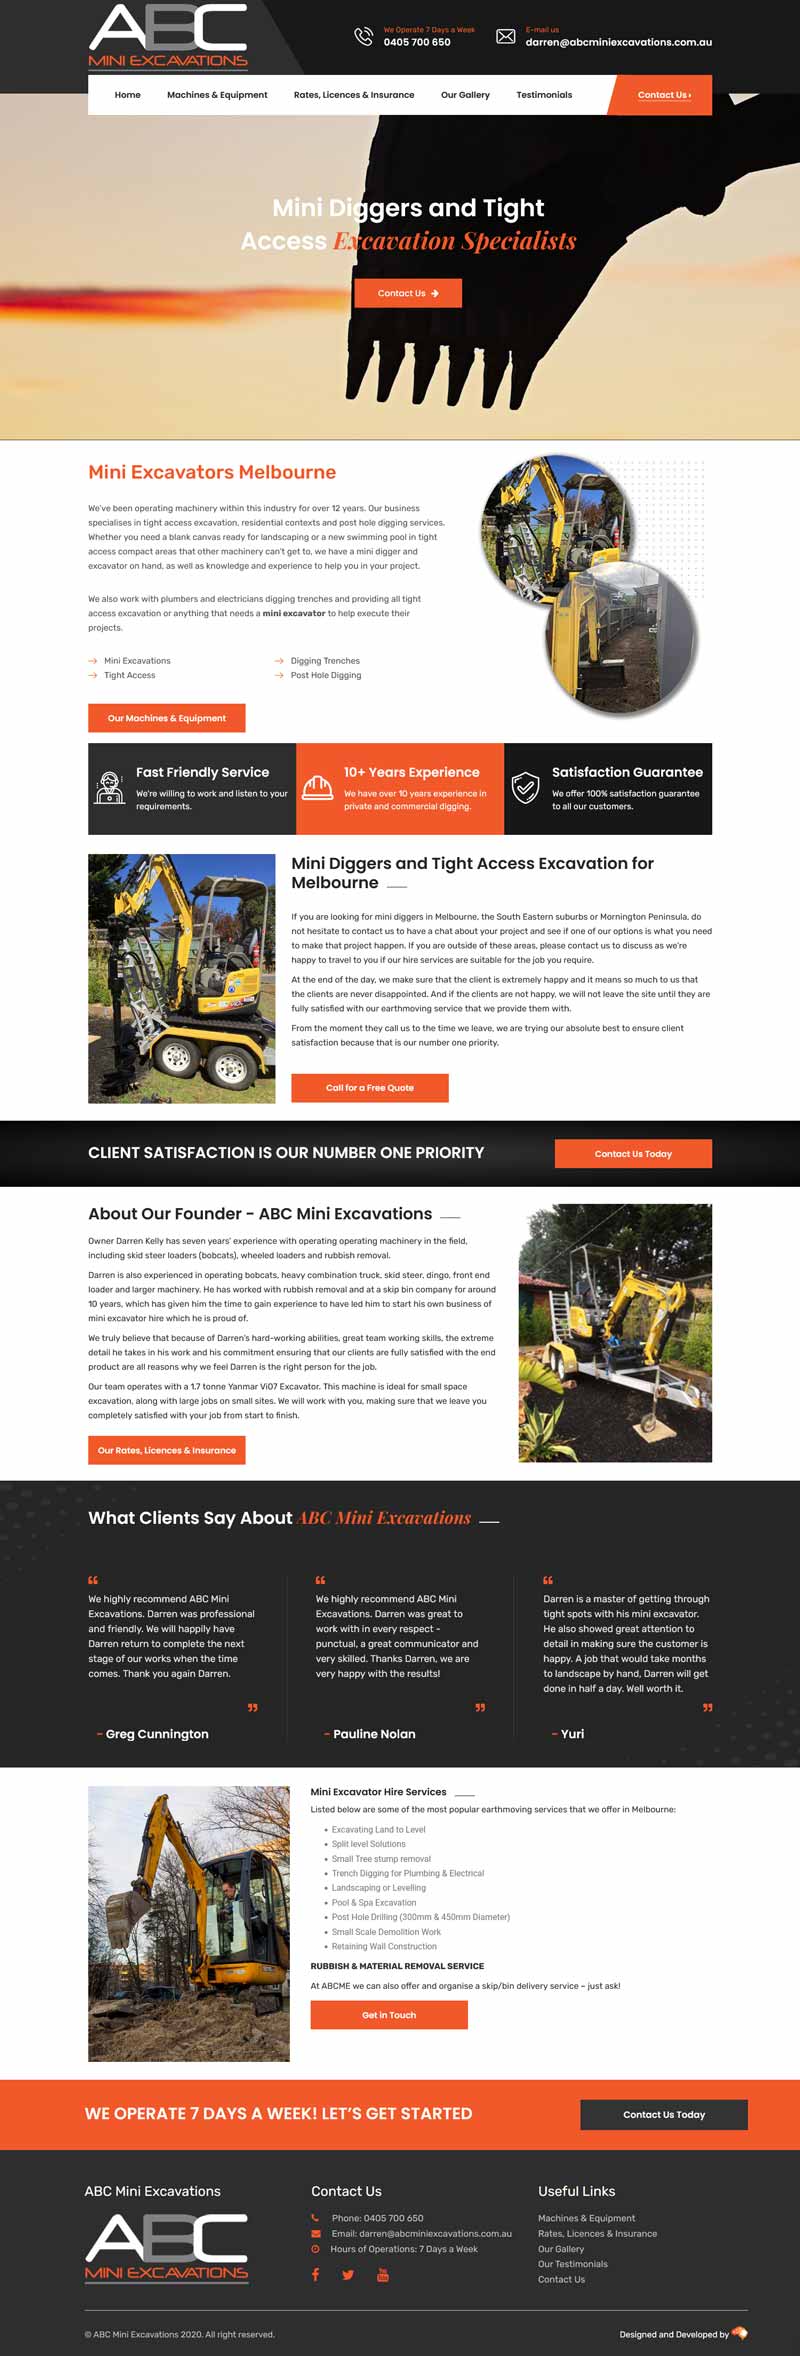 ABC Mini Excavation homepage